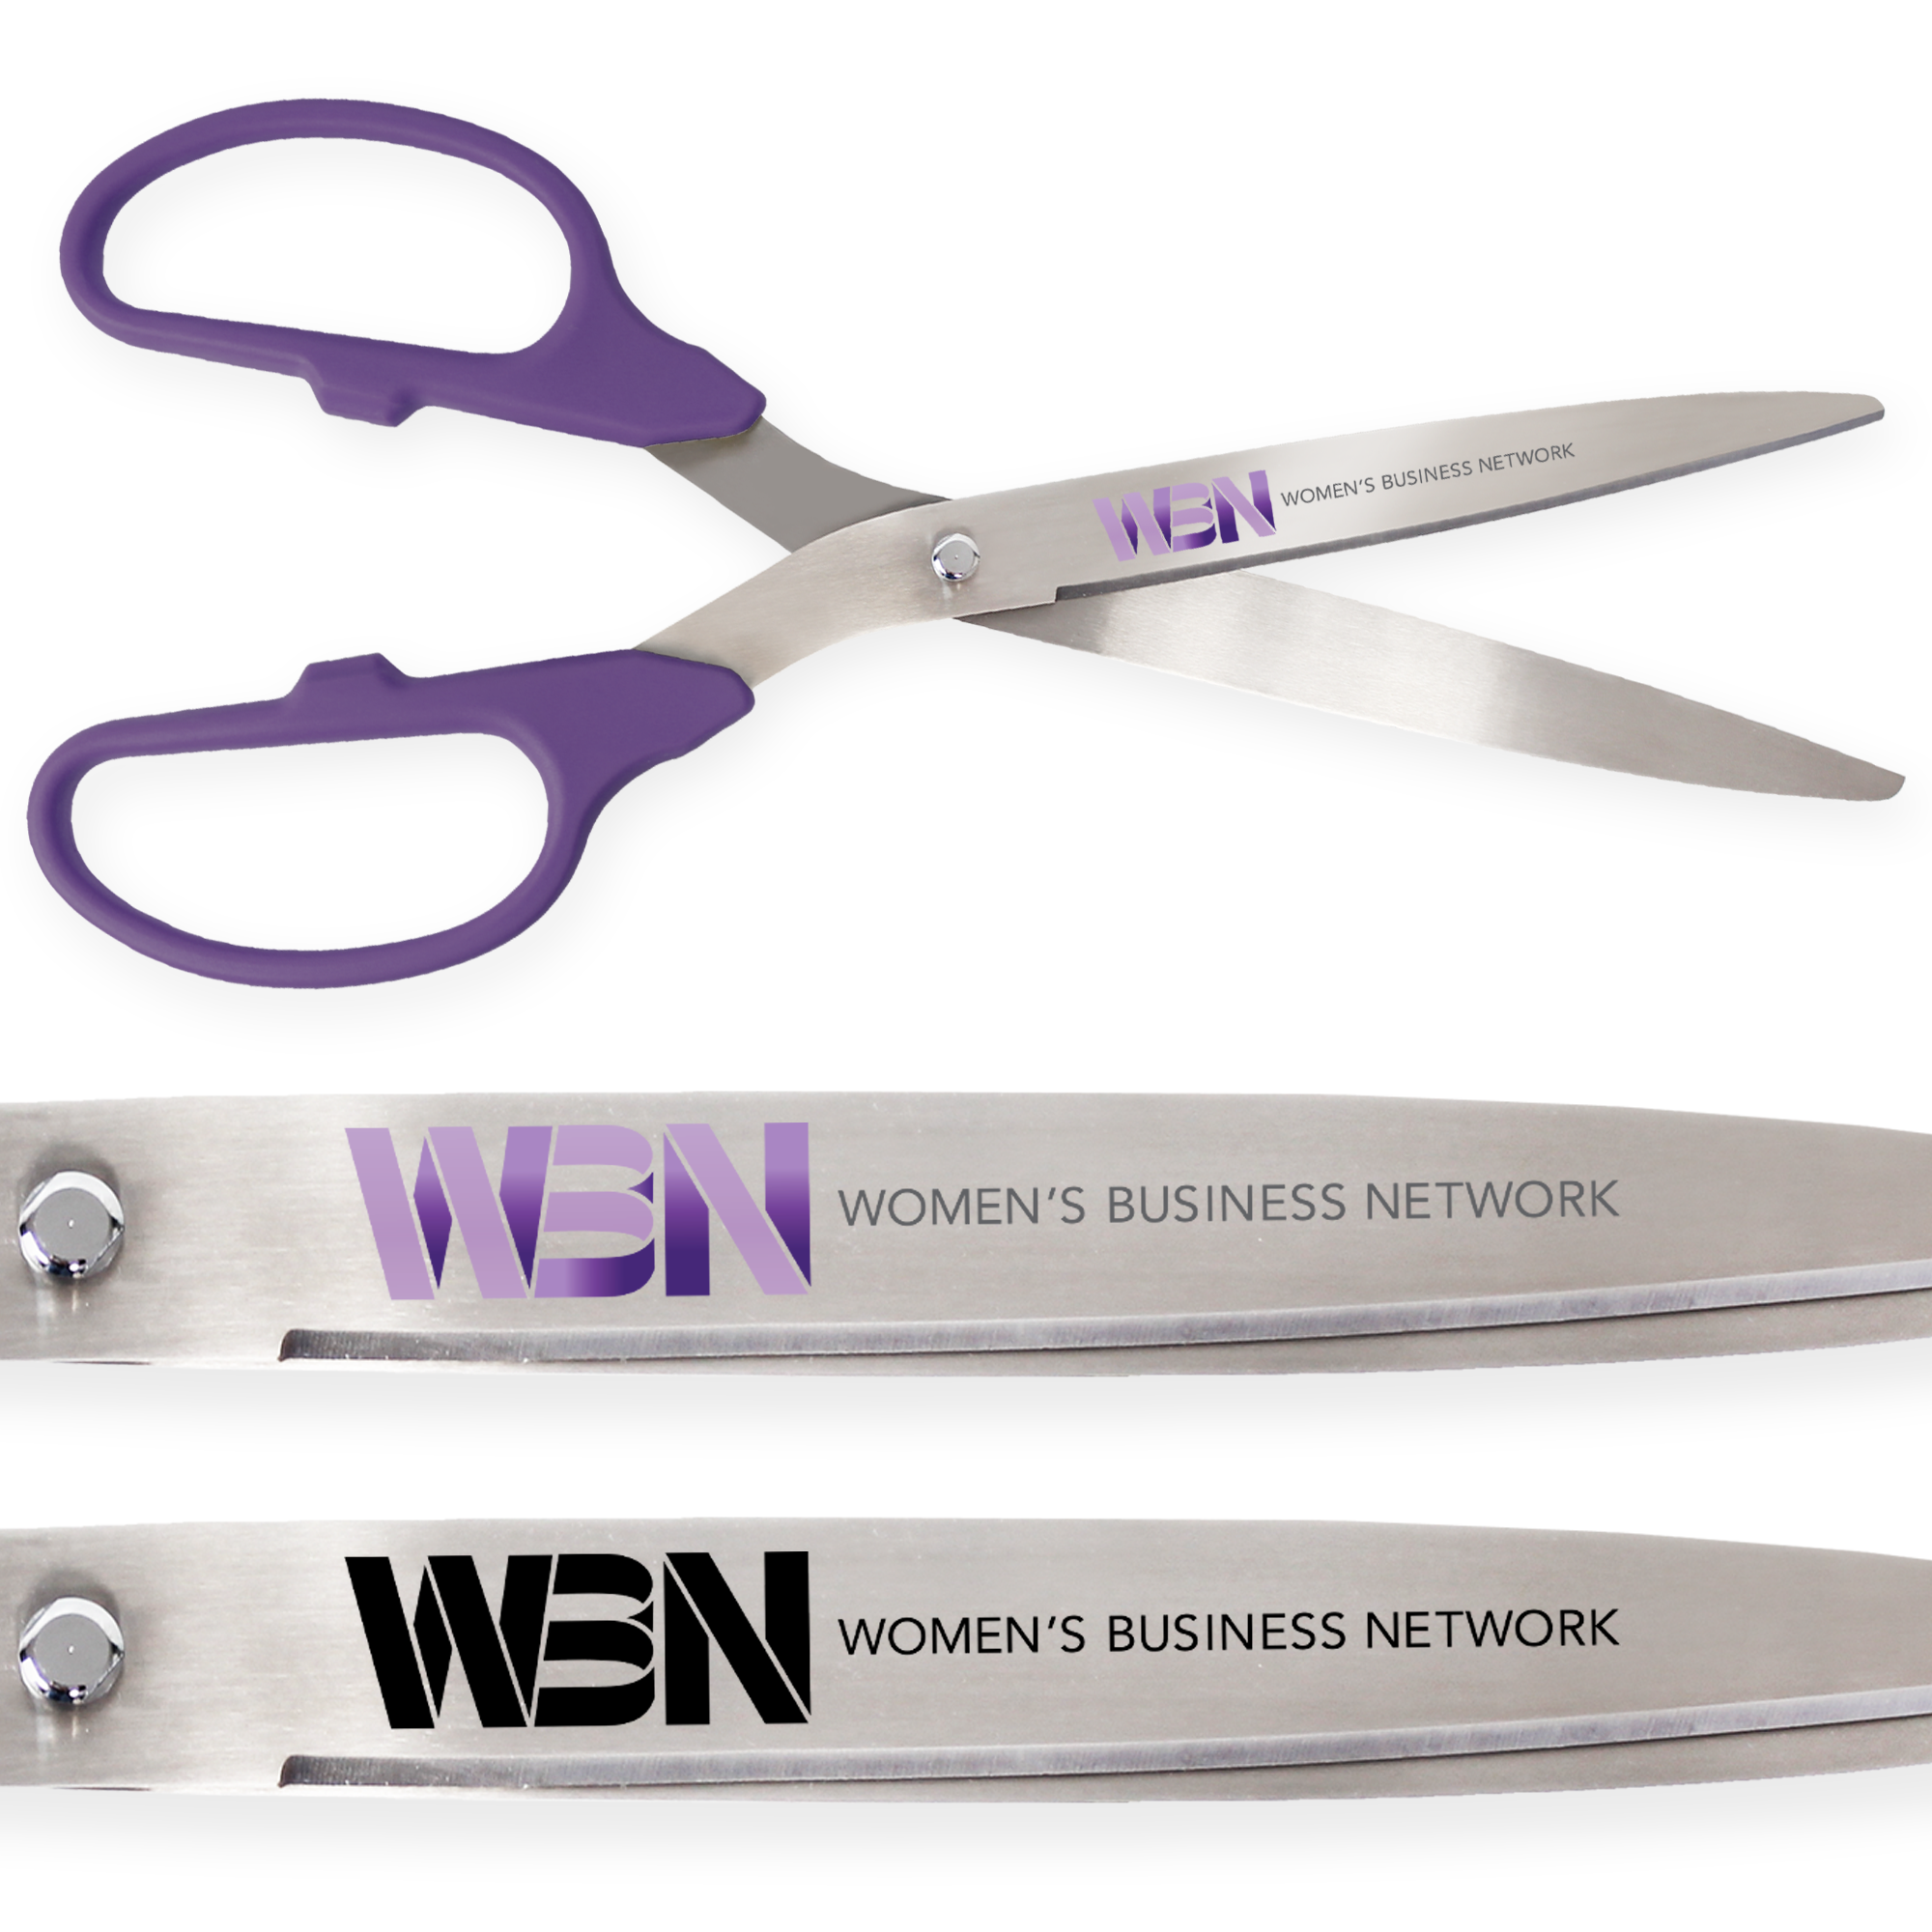 Giant scissors for ribbon cutting rental - Large scissors for